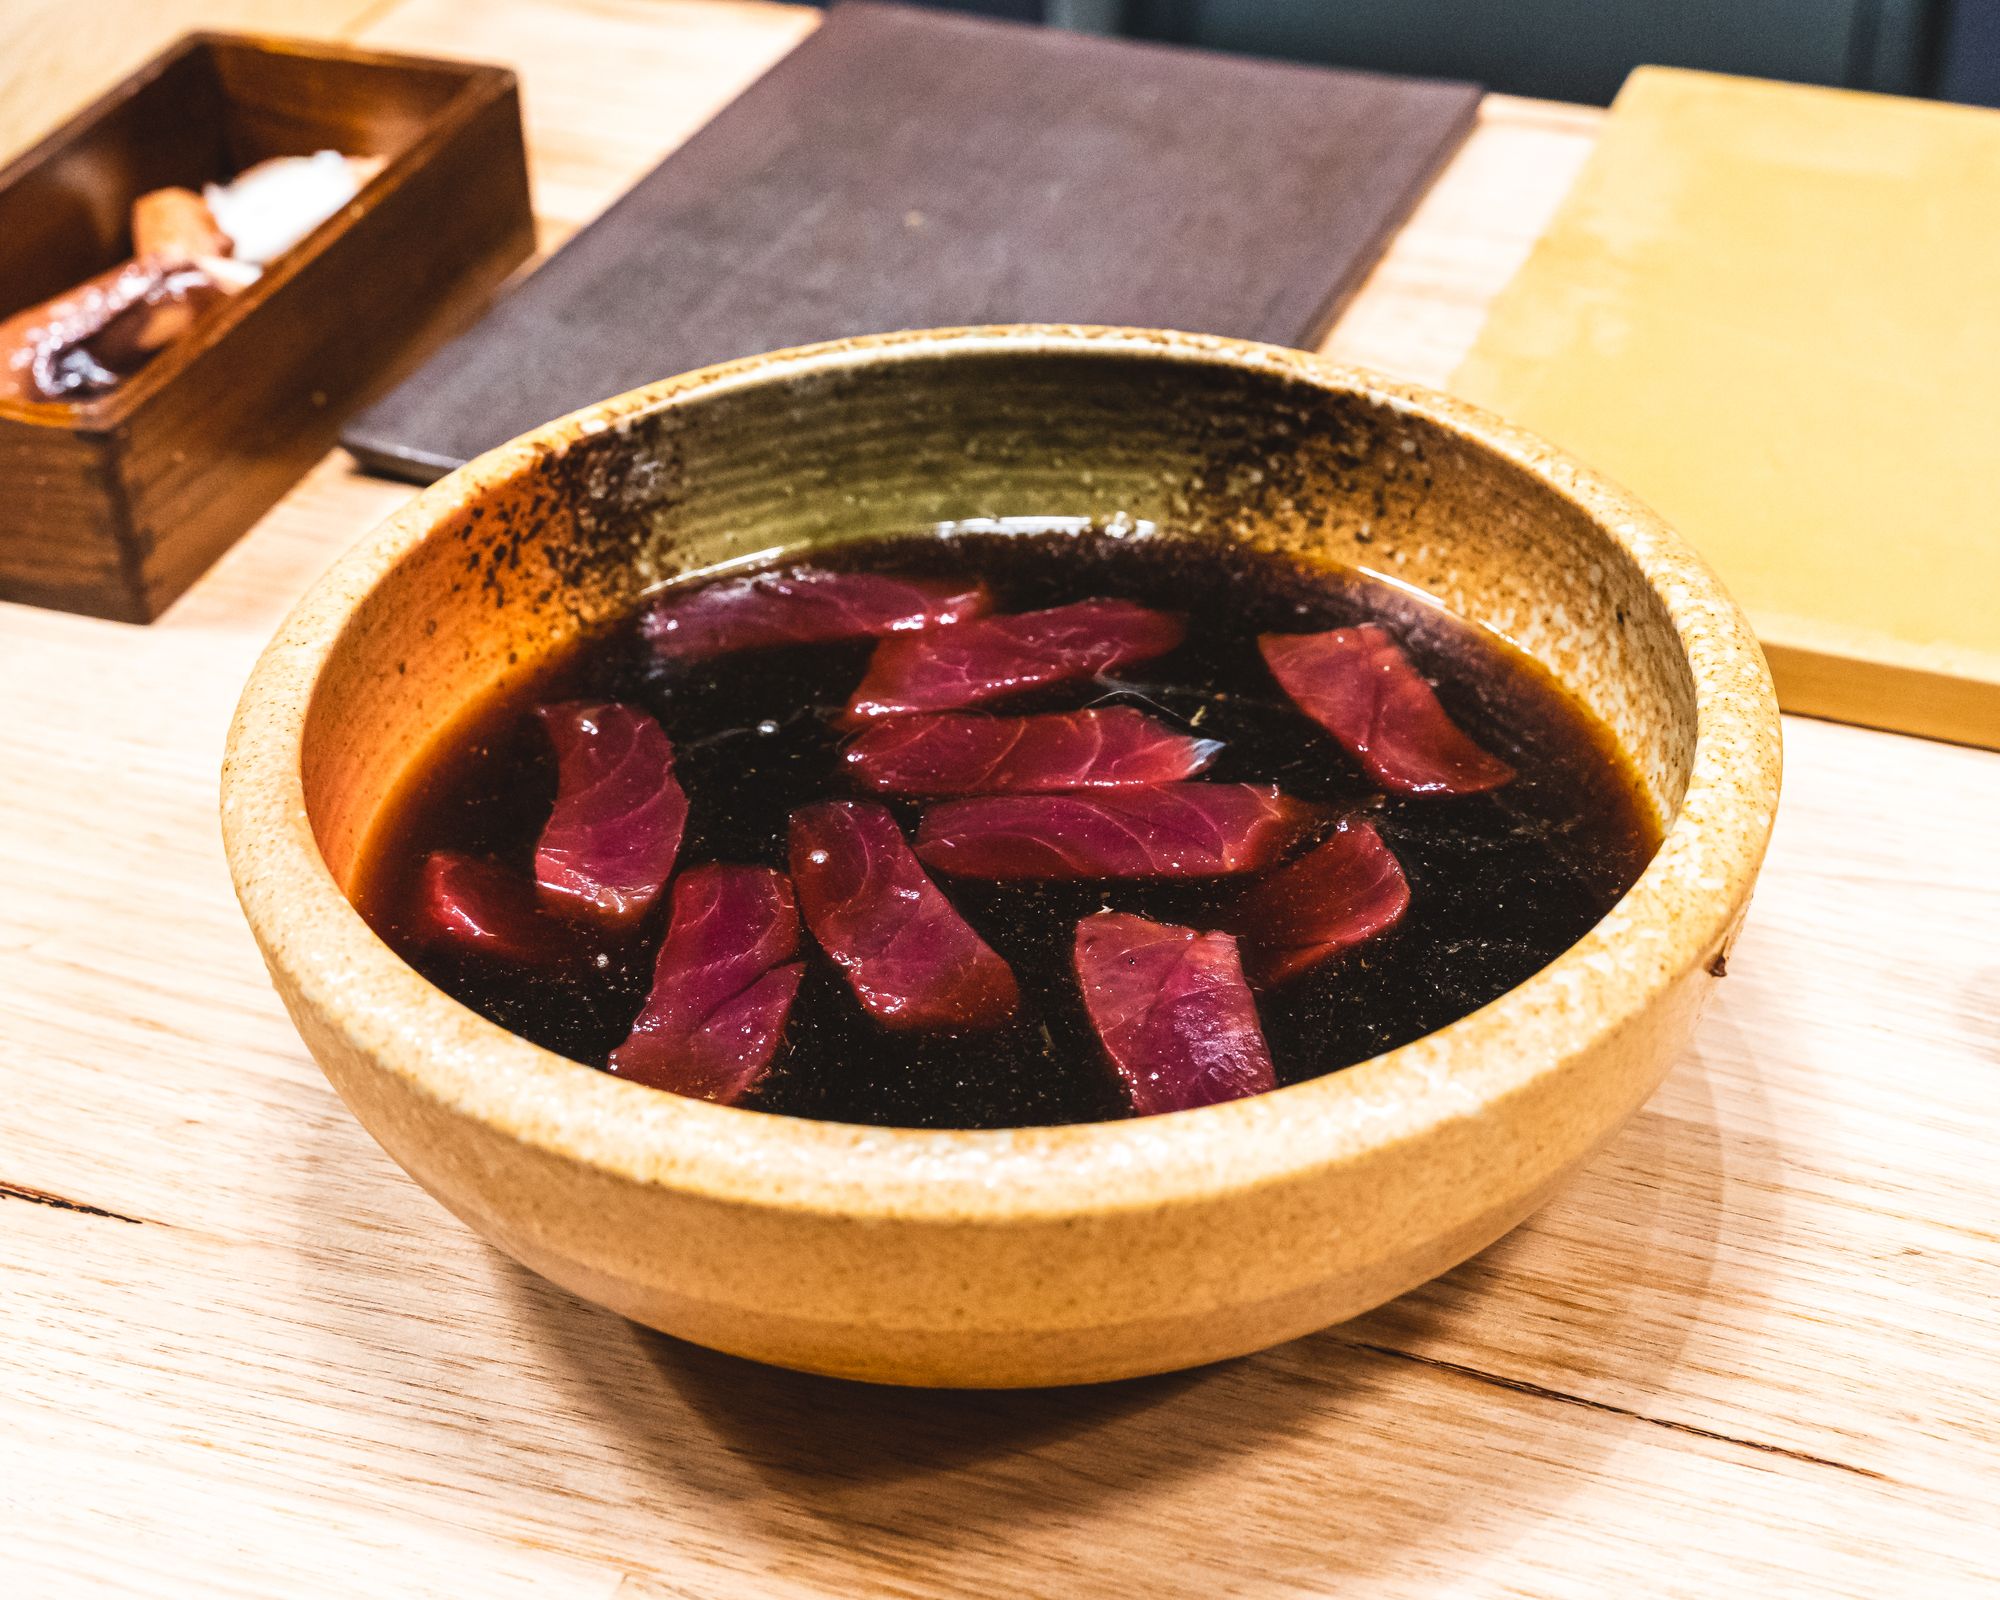 Tuna sashimi marinating in a bowl of soy sauce